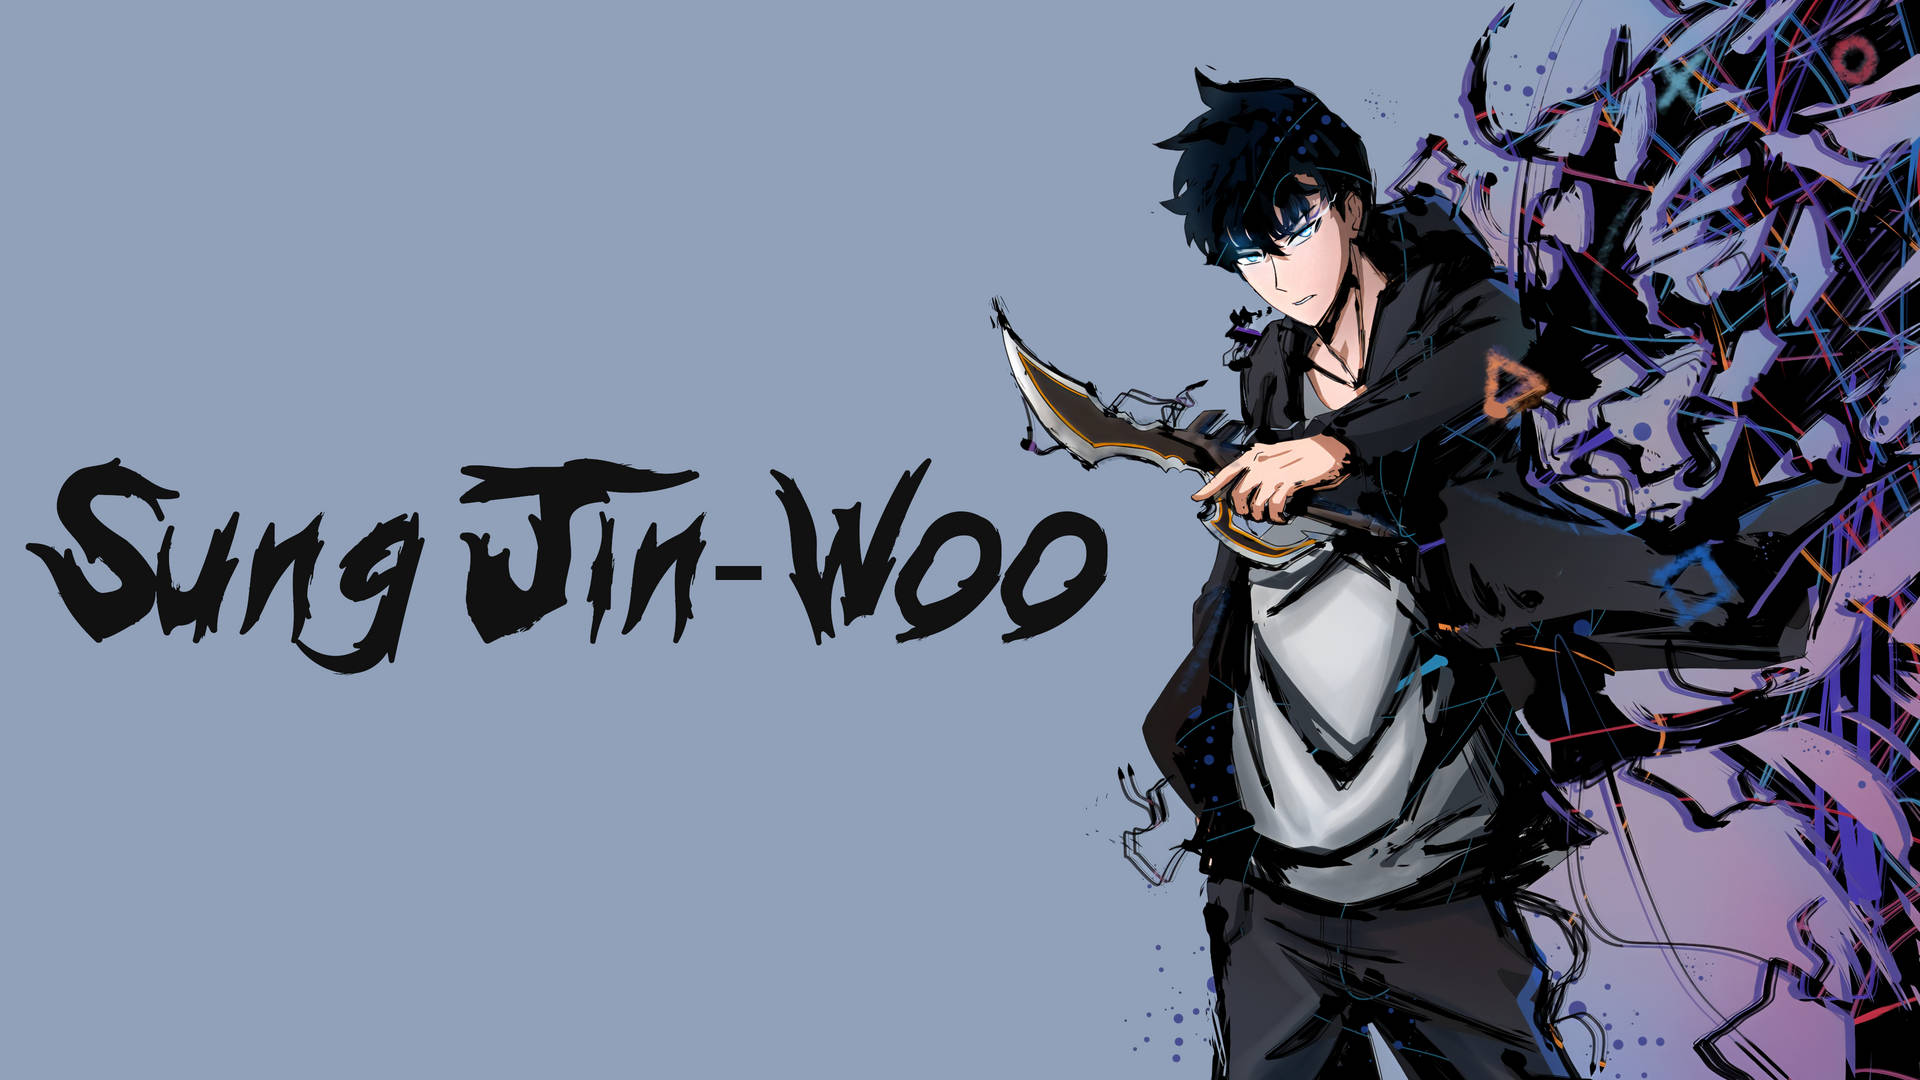 Jin-woo Name Solo Leveling 4k